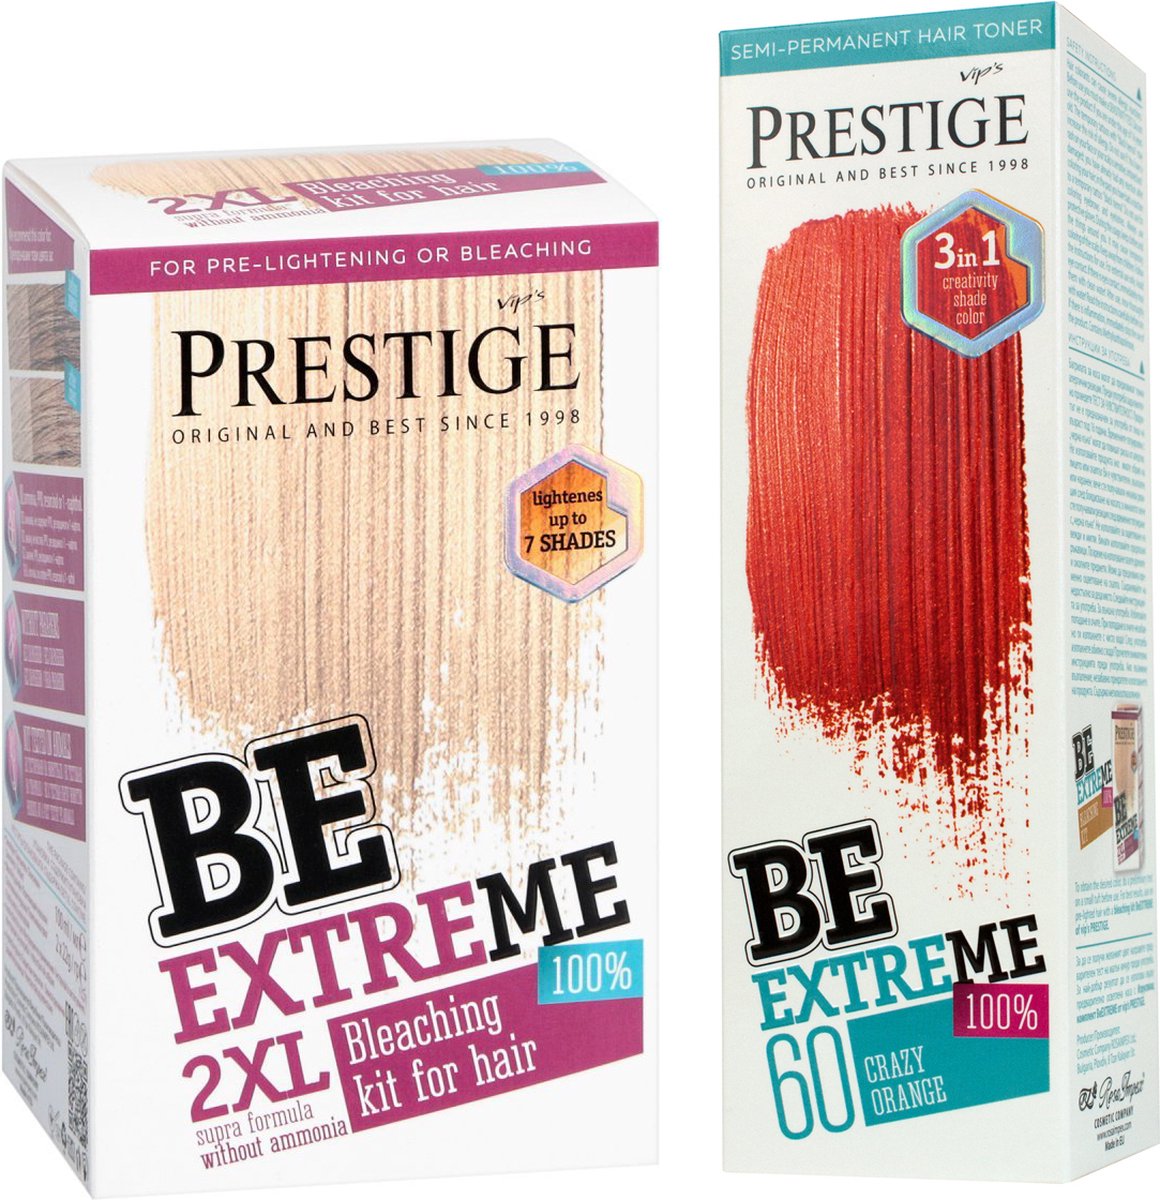 Prestige BeExtreme Semi-Permanente Oranje Haarkleuring - Bleach kit & Crazy Orange Voordeelset